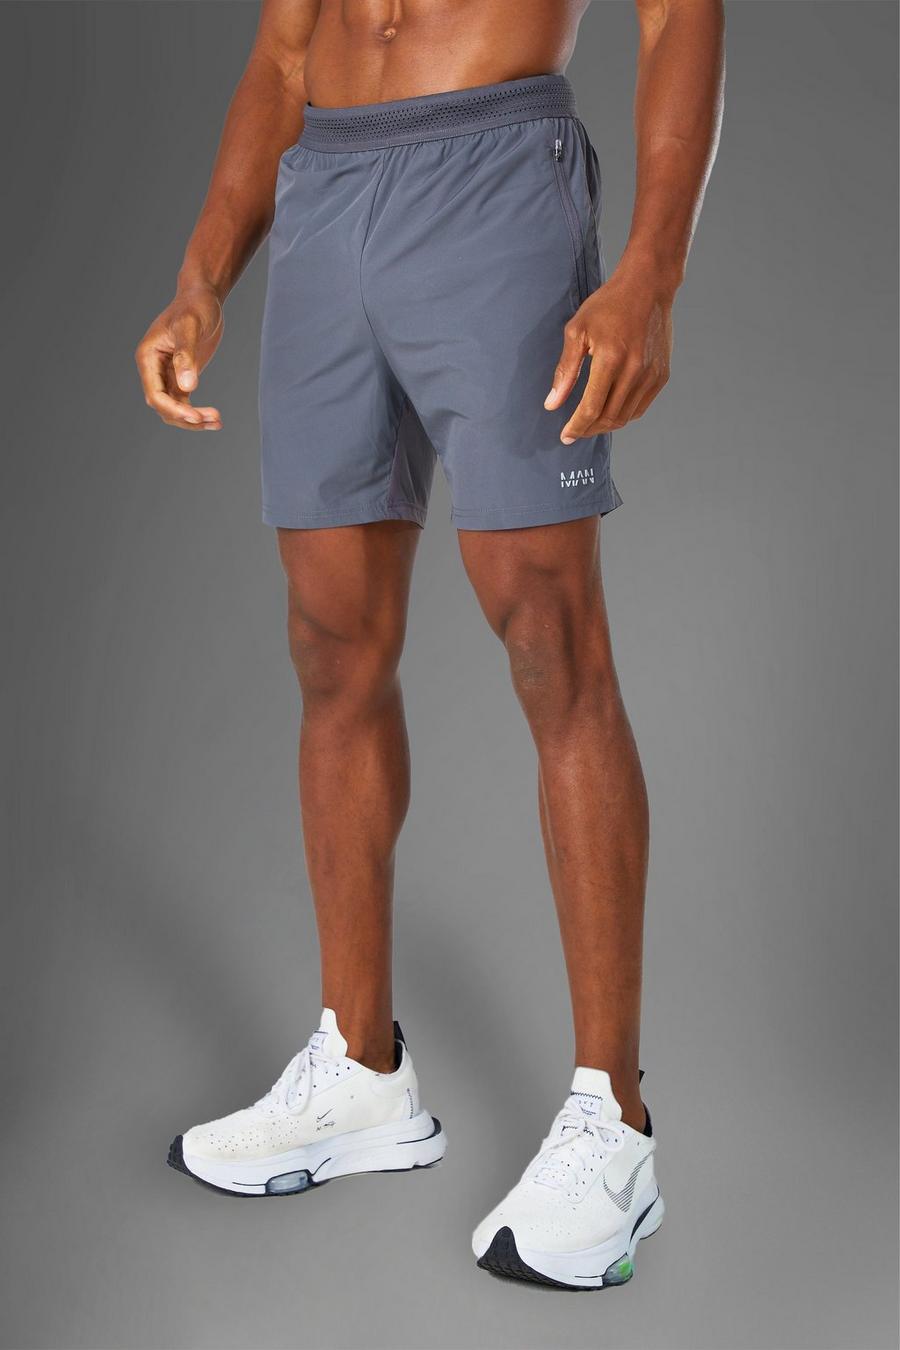 Man Active Shorts, Charcoal grey image number 1